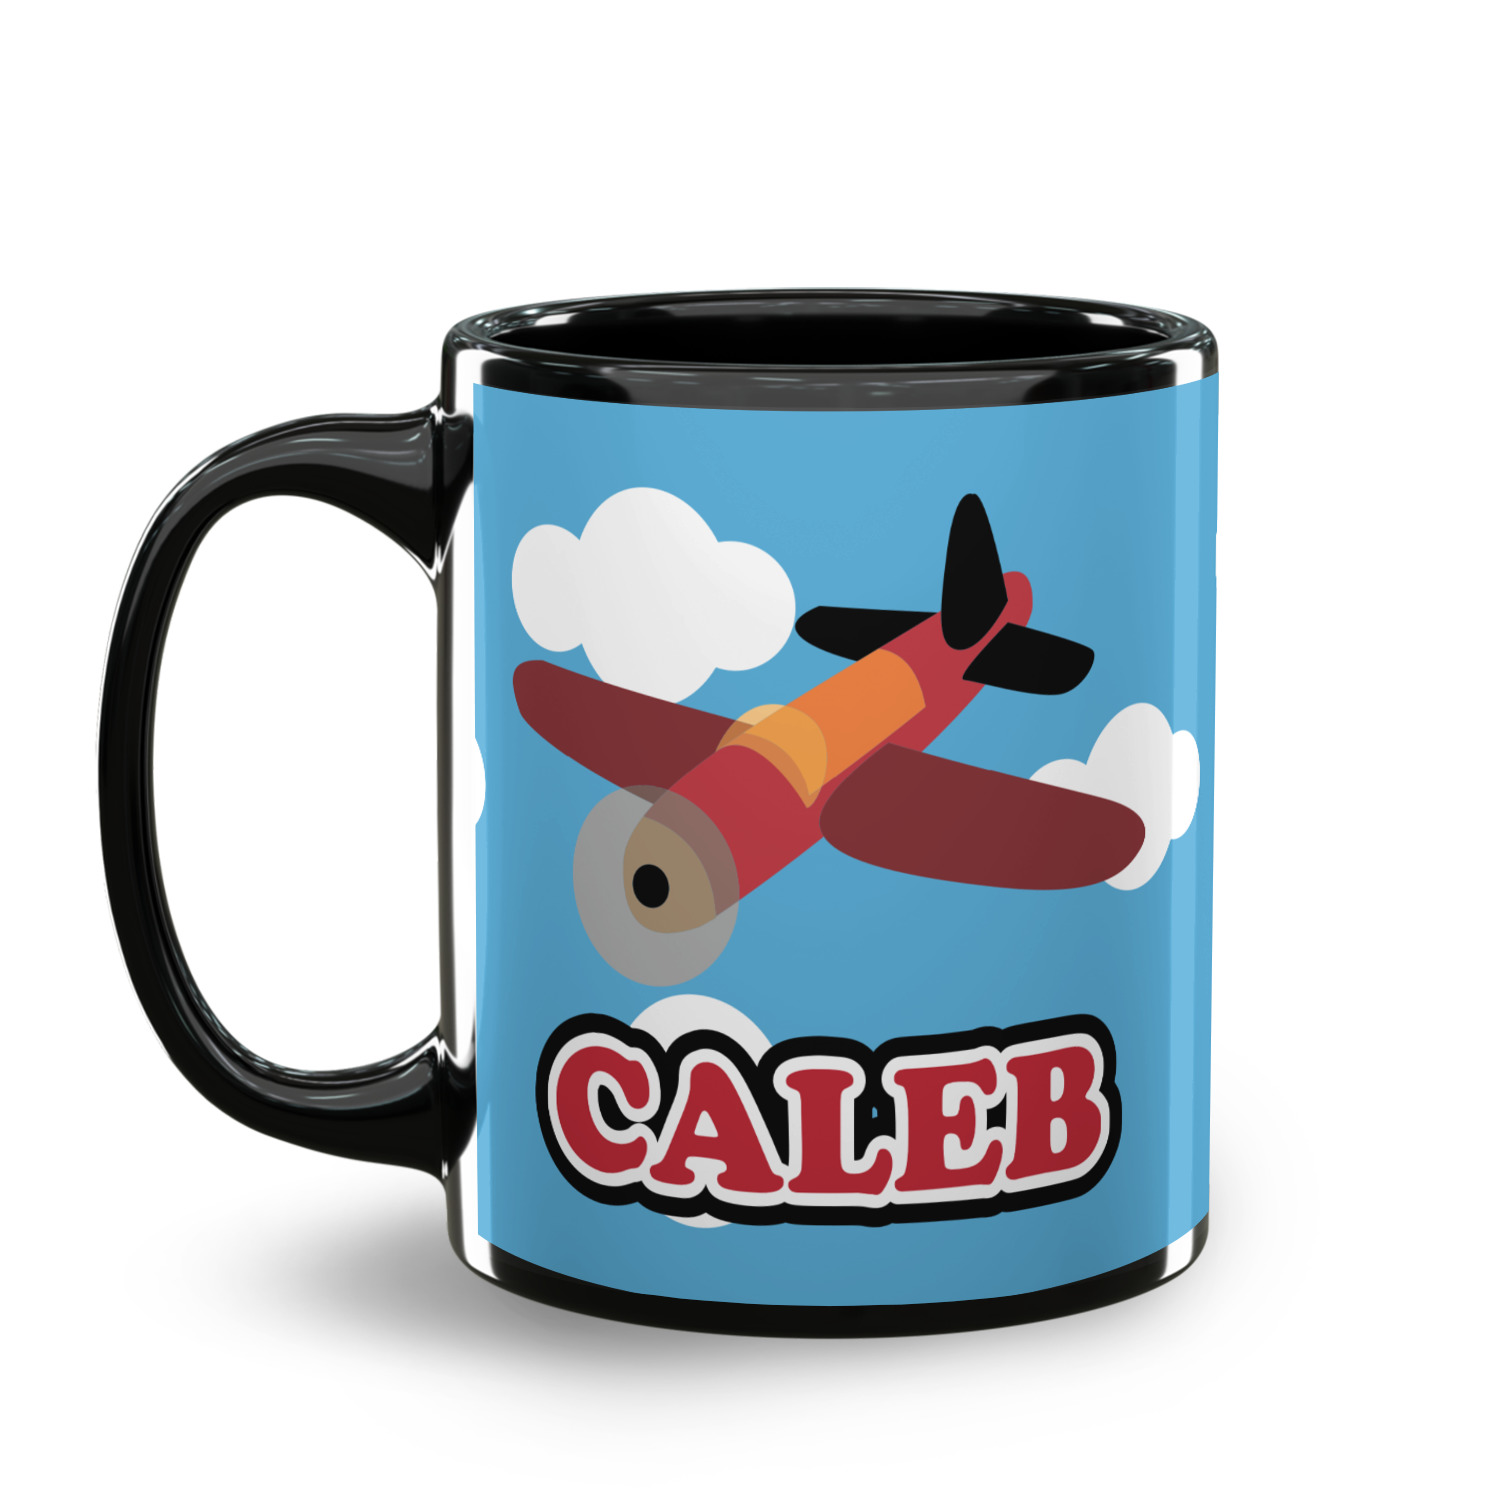 https://www.youcustomizeit.com/common/MAKE/44299/Airplane-Coffee-Mug-11-oz-Black.jpg?lm=1604015417